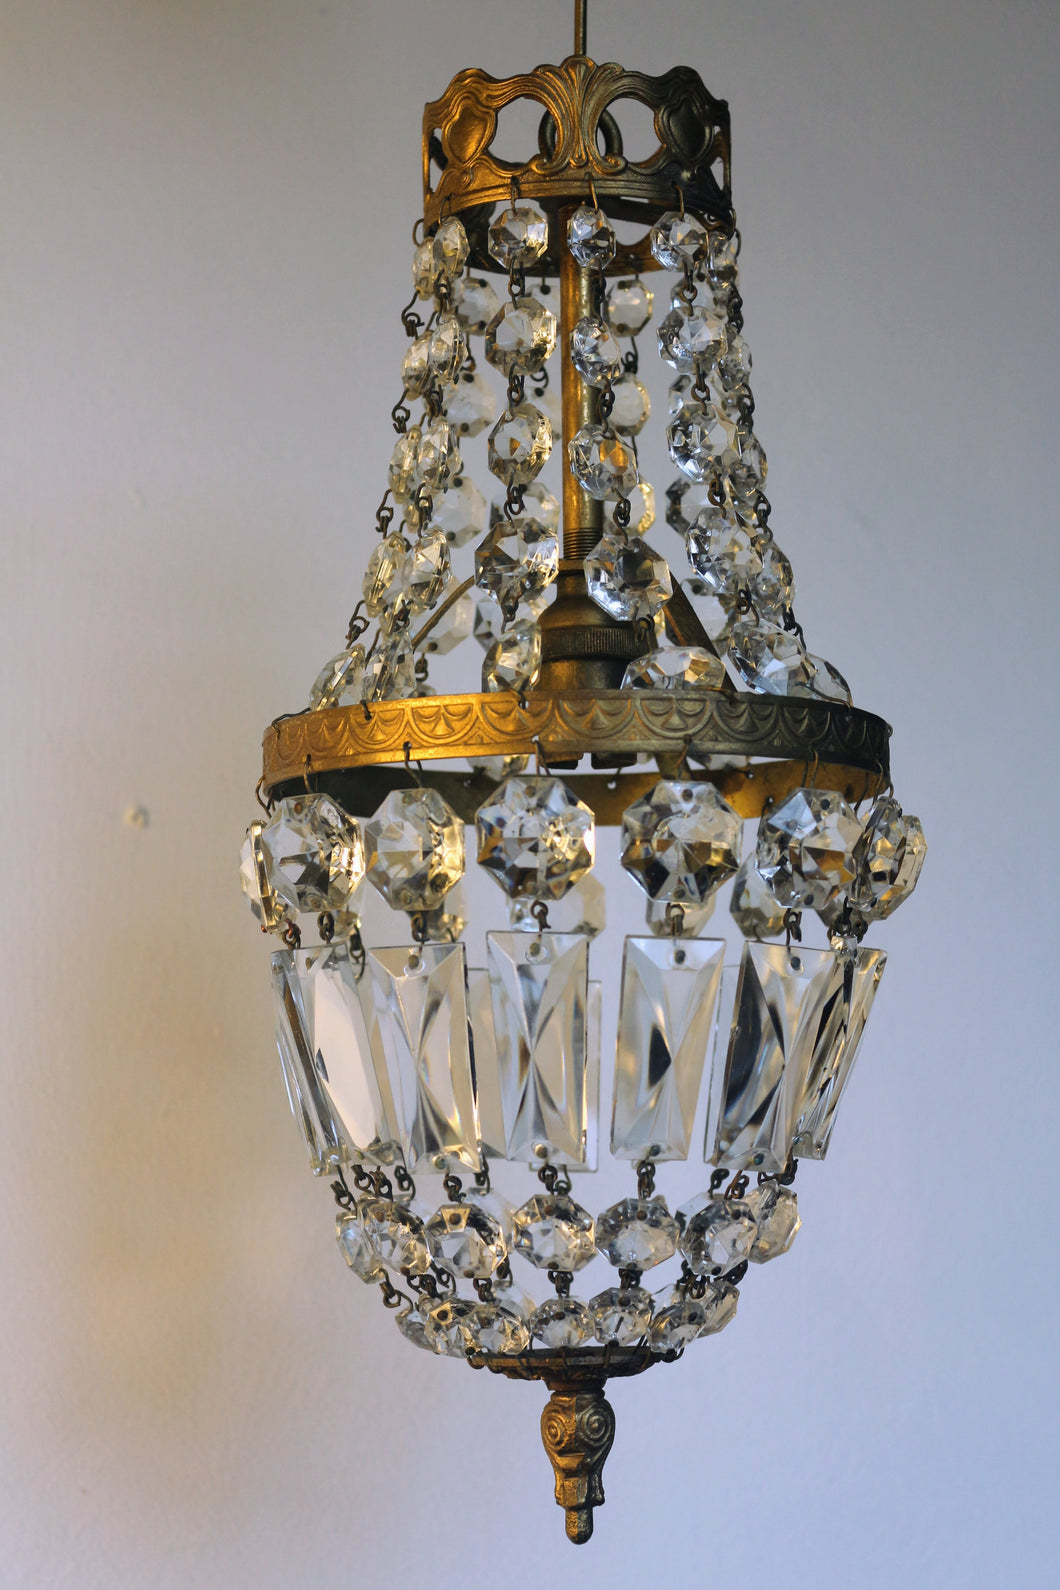 Empire Chandelier. Vintage crystal Light With Elegant Art Nouveau detailed brass frame. Complete with original ornate ceiling rose.